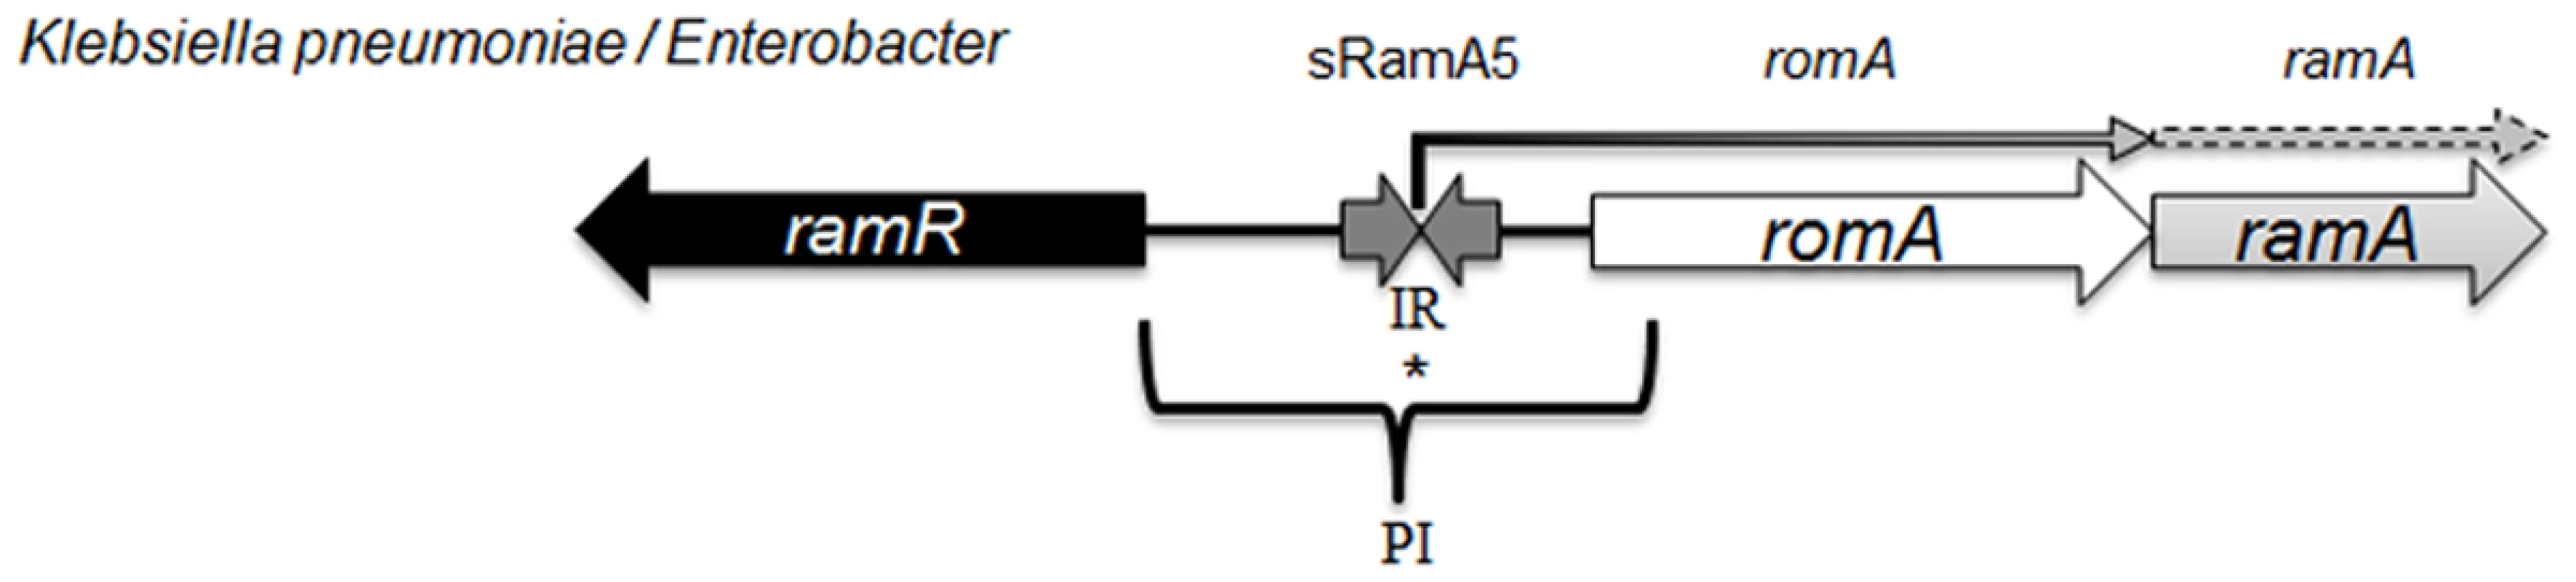 Organisation of the <i>ram</i> locus in <i>Klebsiella pneumoniae / Enterobacter</i> spp.